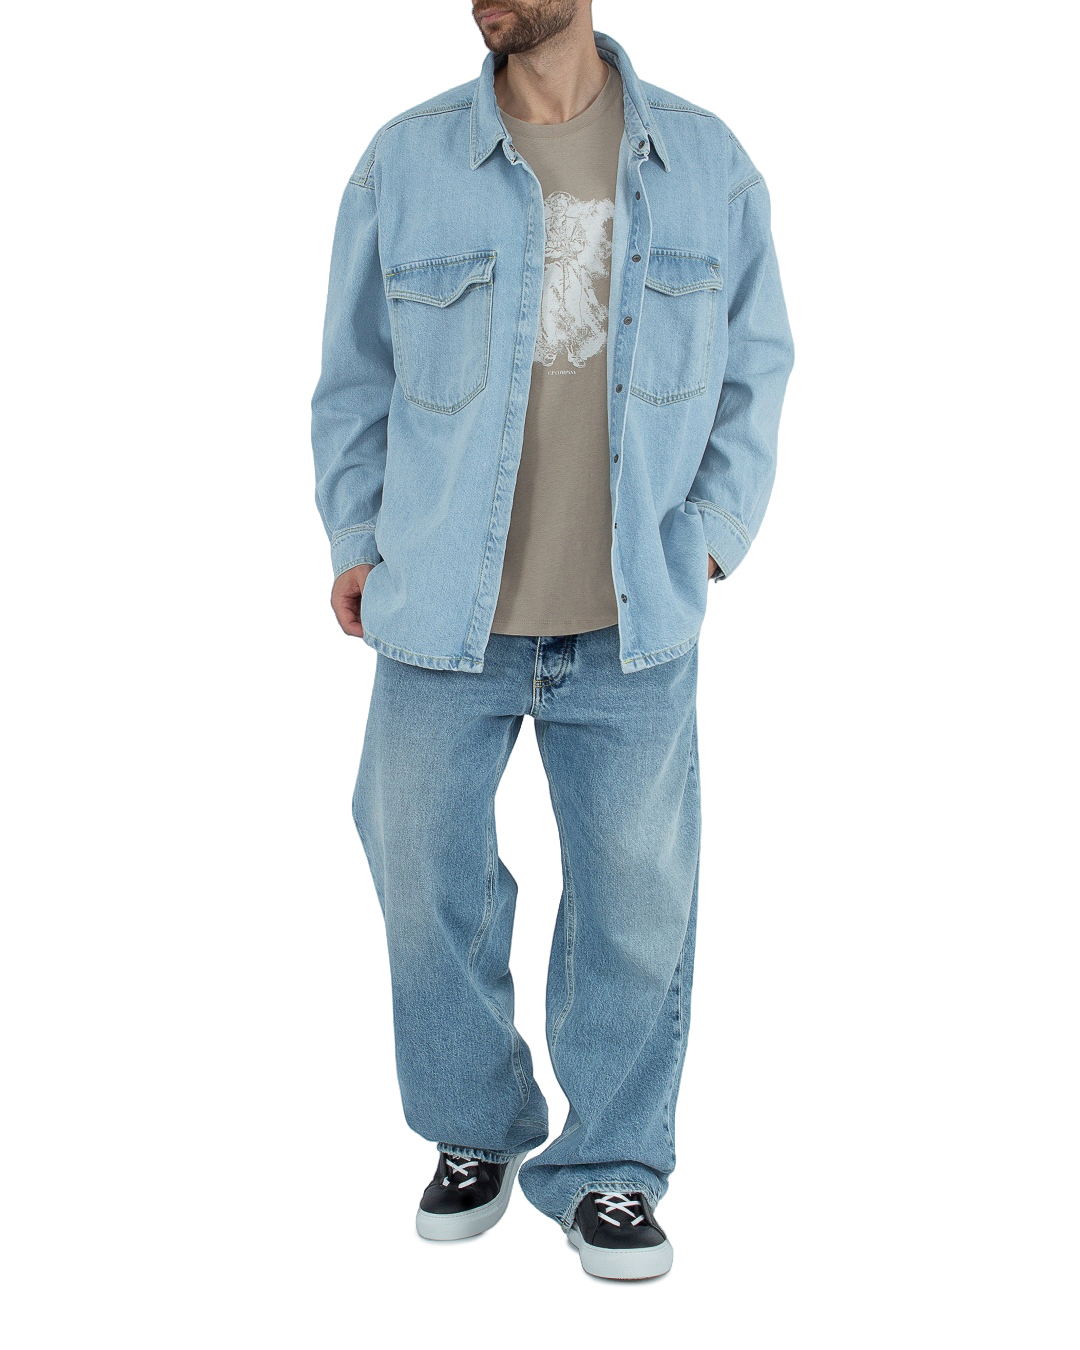 джинсы ICON DENIM WILLID754 синий 35, размер 35 - фото 2